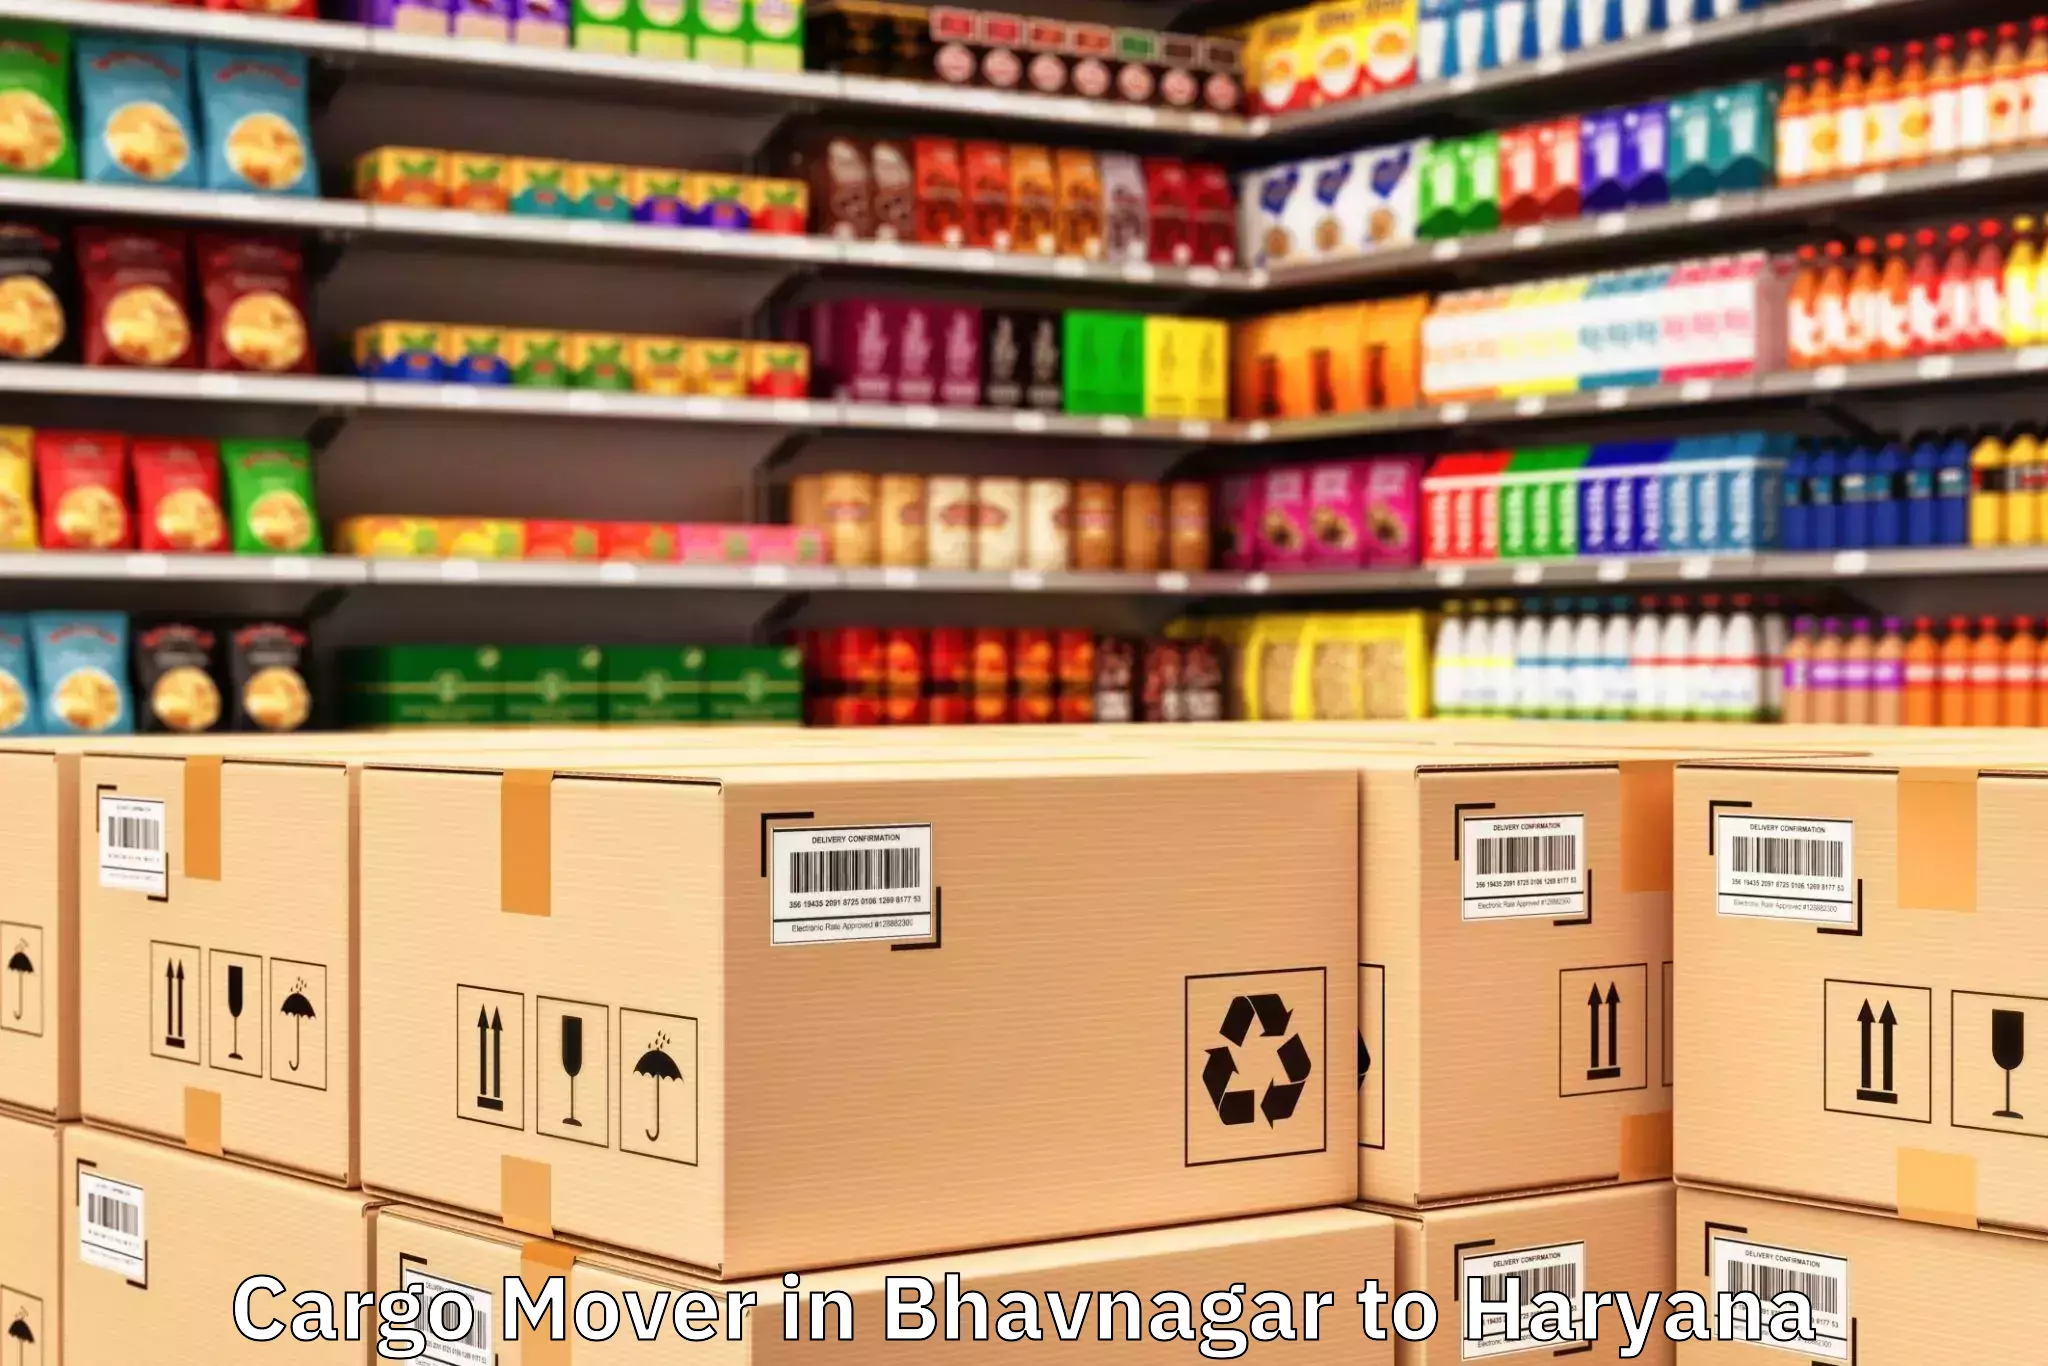 Efficient Bhavnagar to Gurugram Cargo Mover